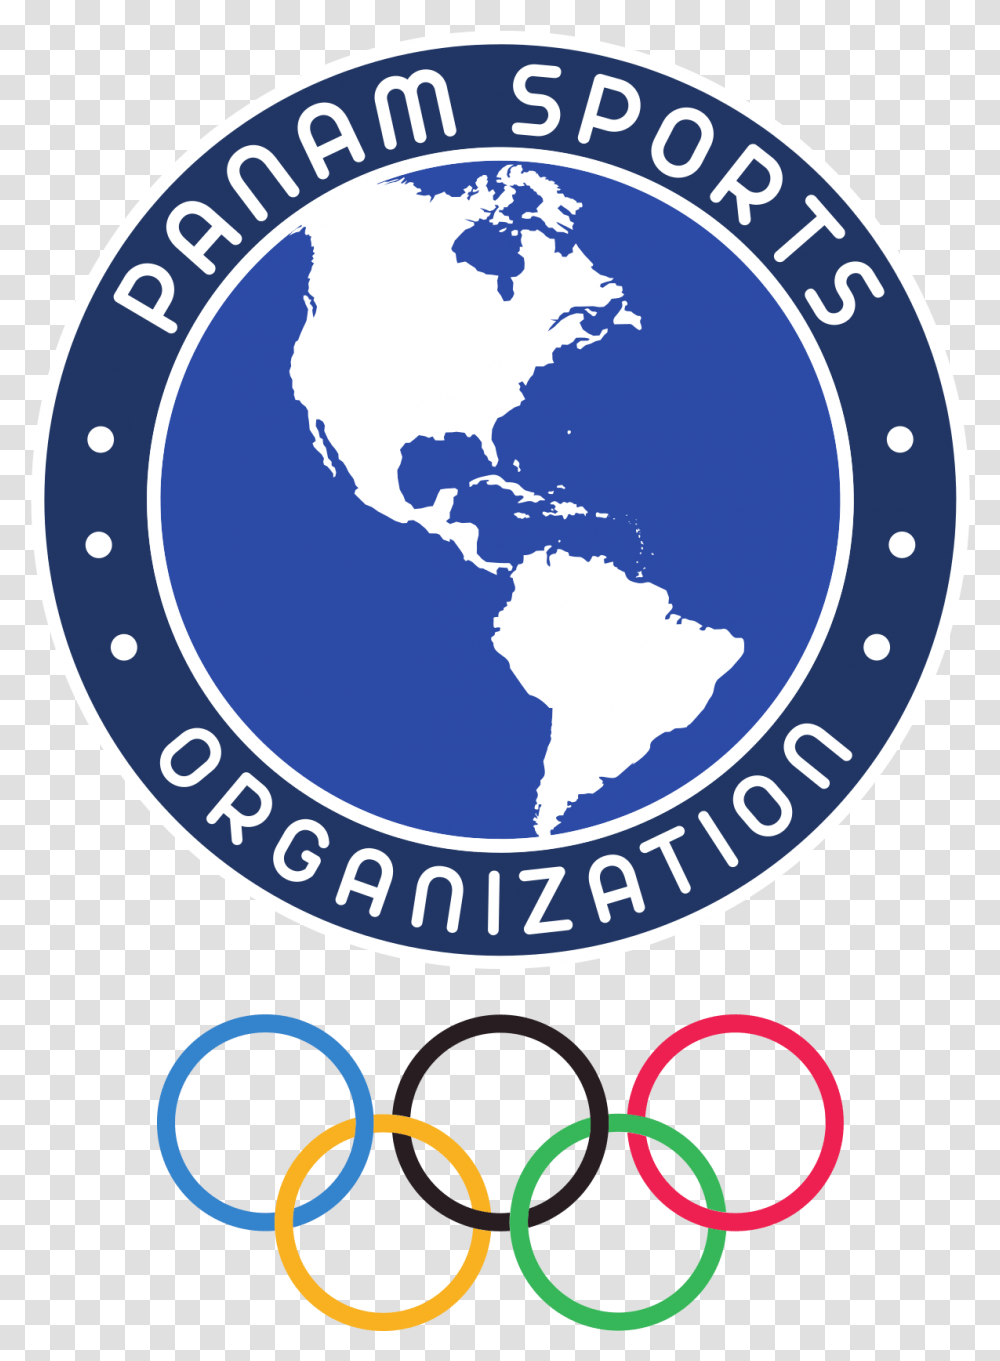 Pan American Games Wikipedia Pan American Games Logo, Symbol, Trademark, Astronomy, Poster Transparent Png